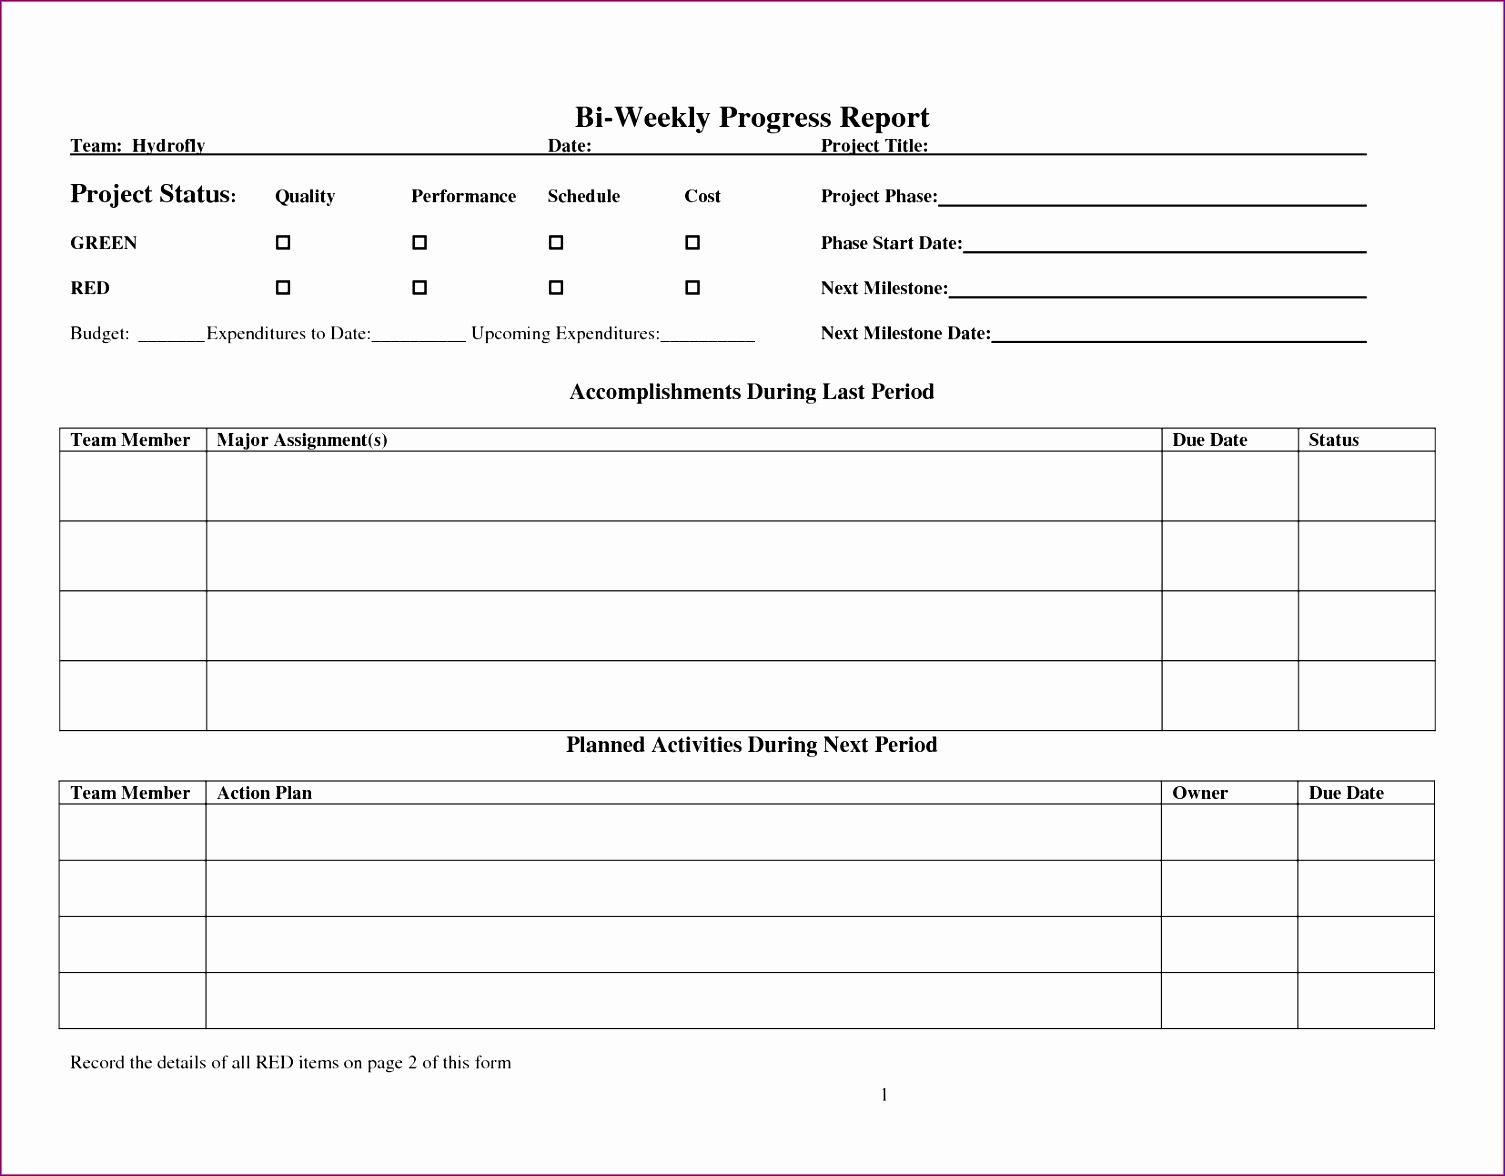 bi weekly progress report template sheet sample 15051176